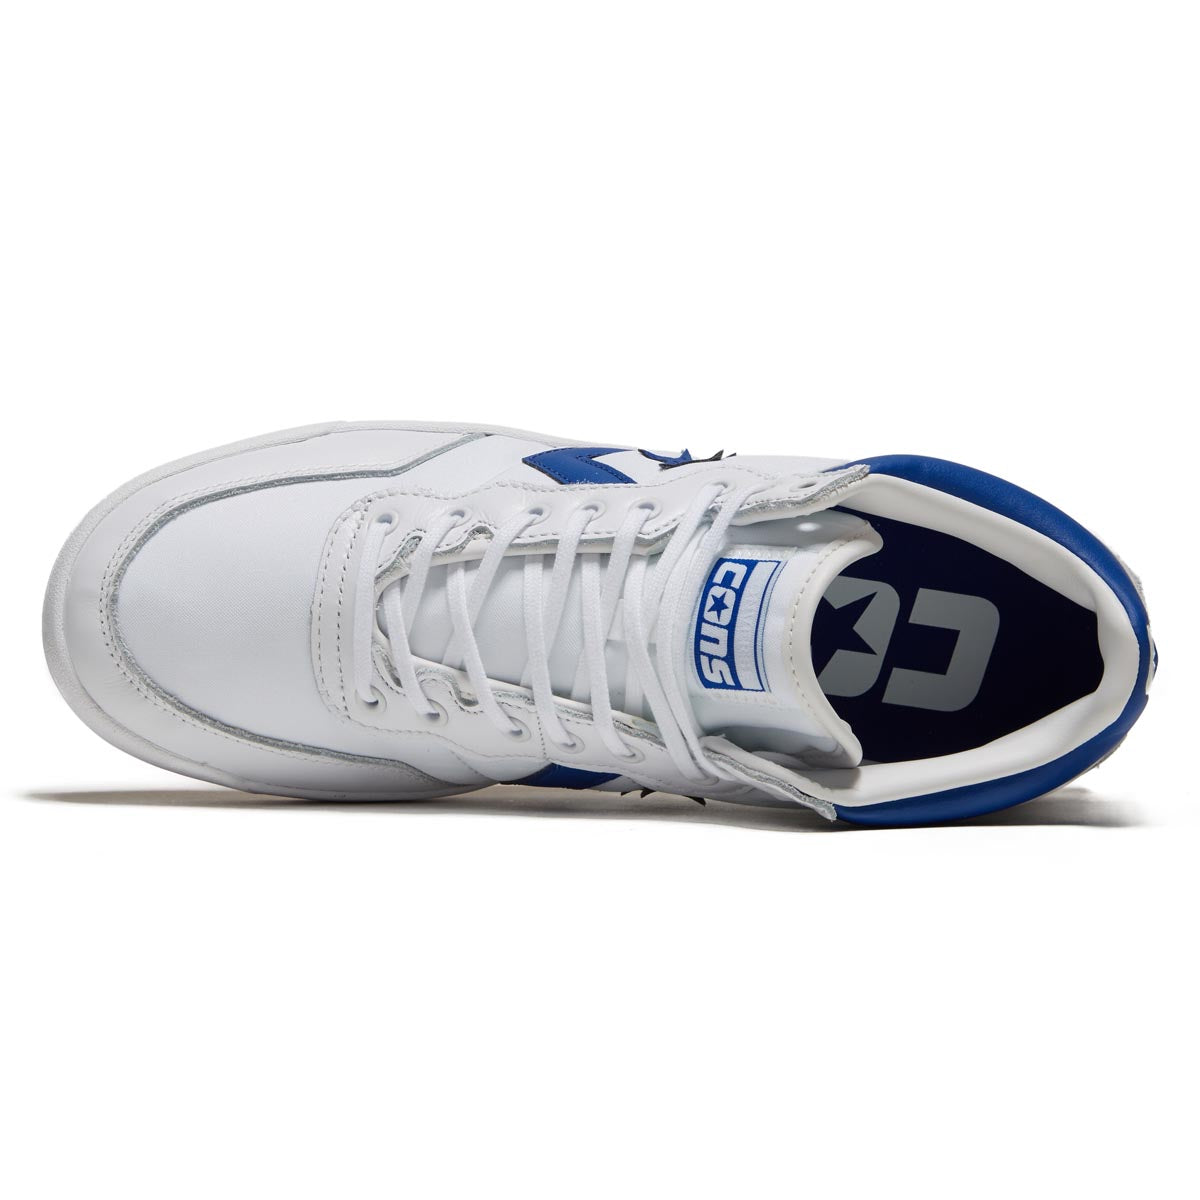 Converse Fastbreak Pro Leather Mid Shoes - White/Blue/White image 3